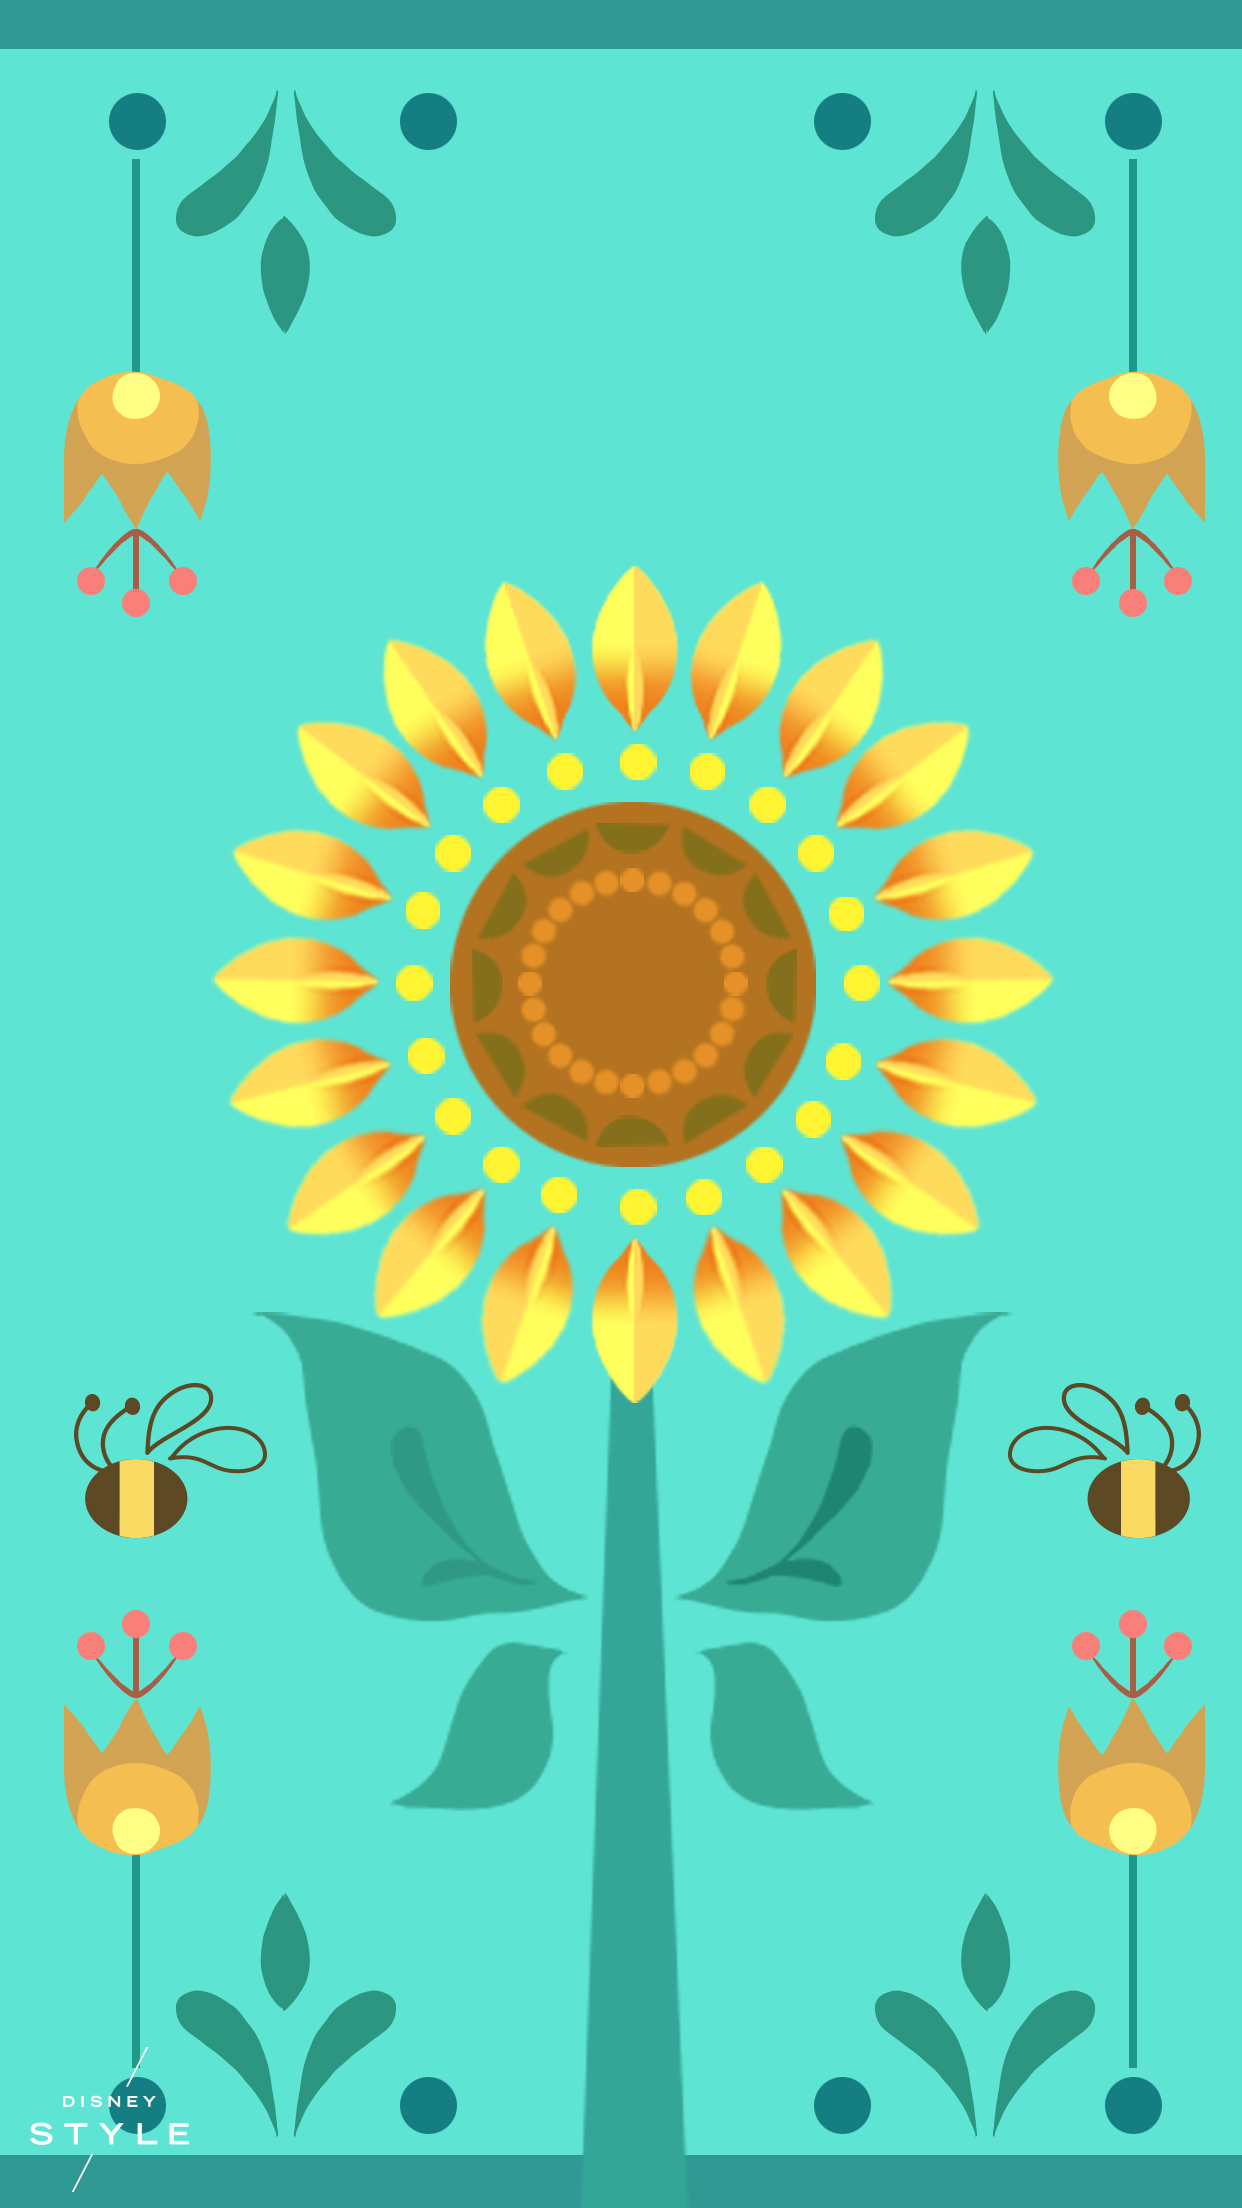 disney style wallpaper,sunflower,yellow,sunflower,turquoise,flower